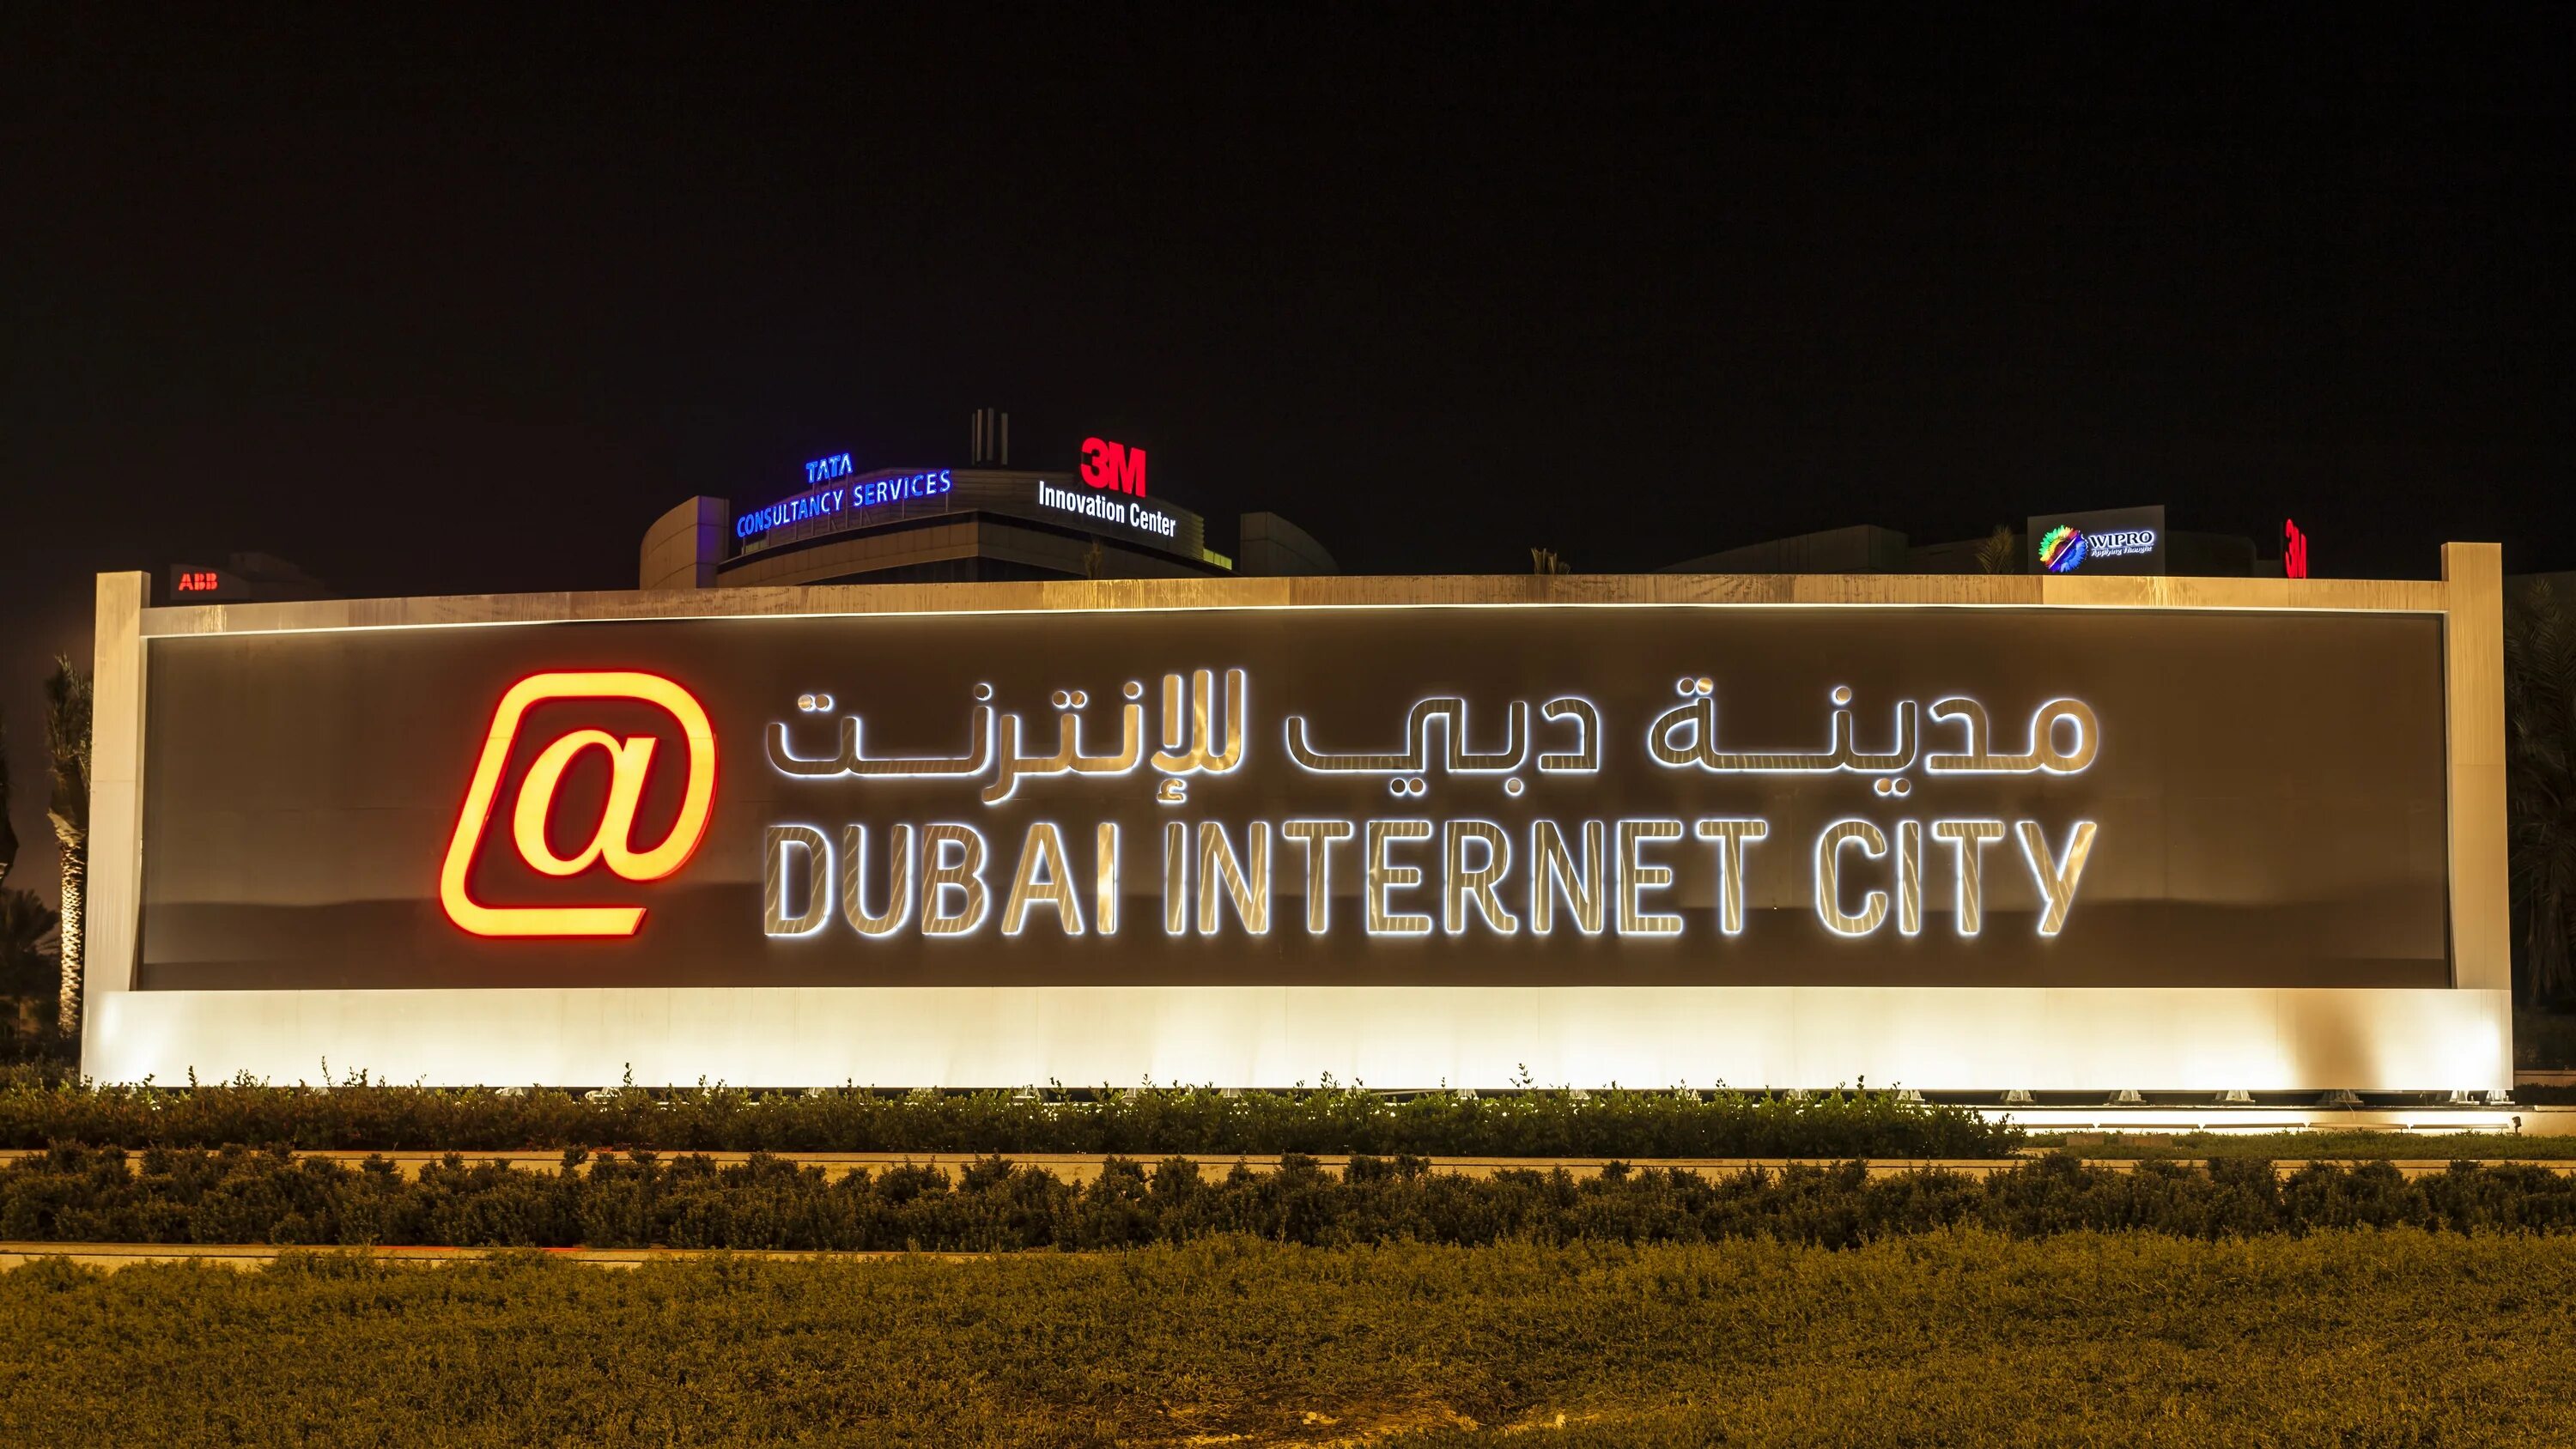 Дубай интернет сити. Internet City Dubai картинки. Dubai Internet City, UAE.